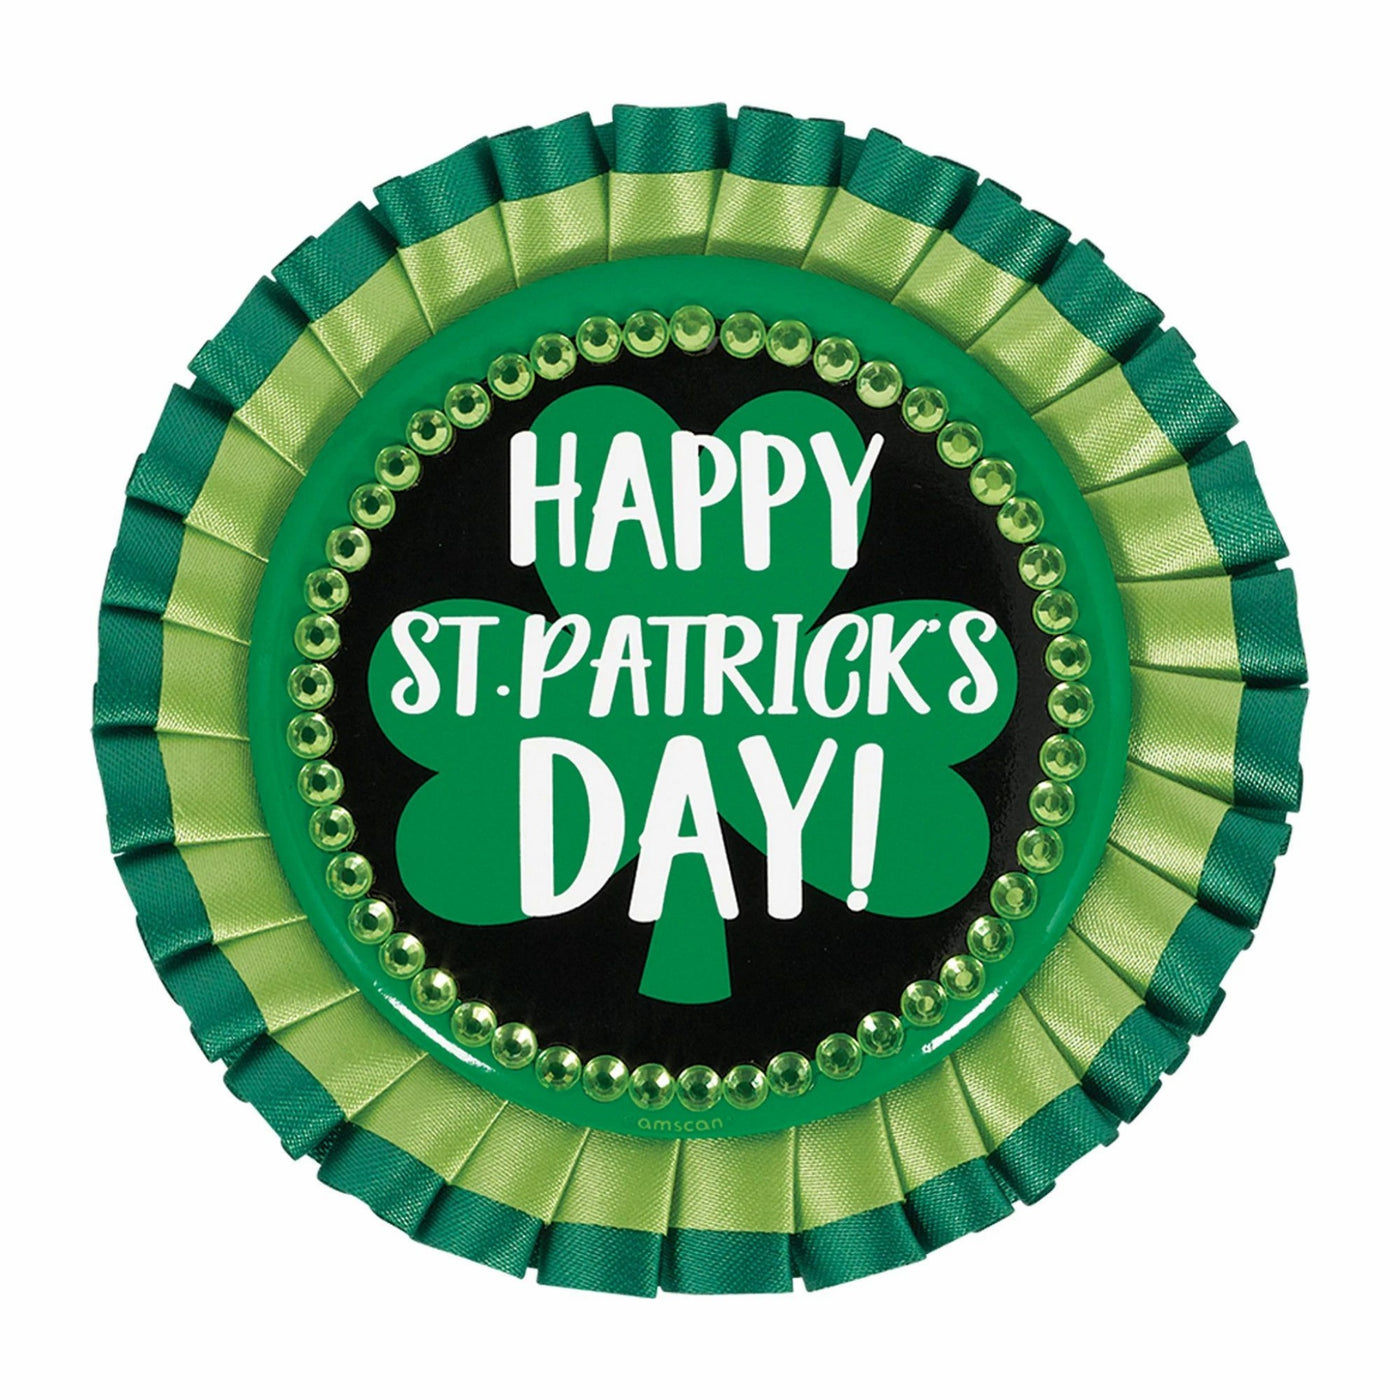 St. Patrick's Day Big Fun Button